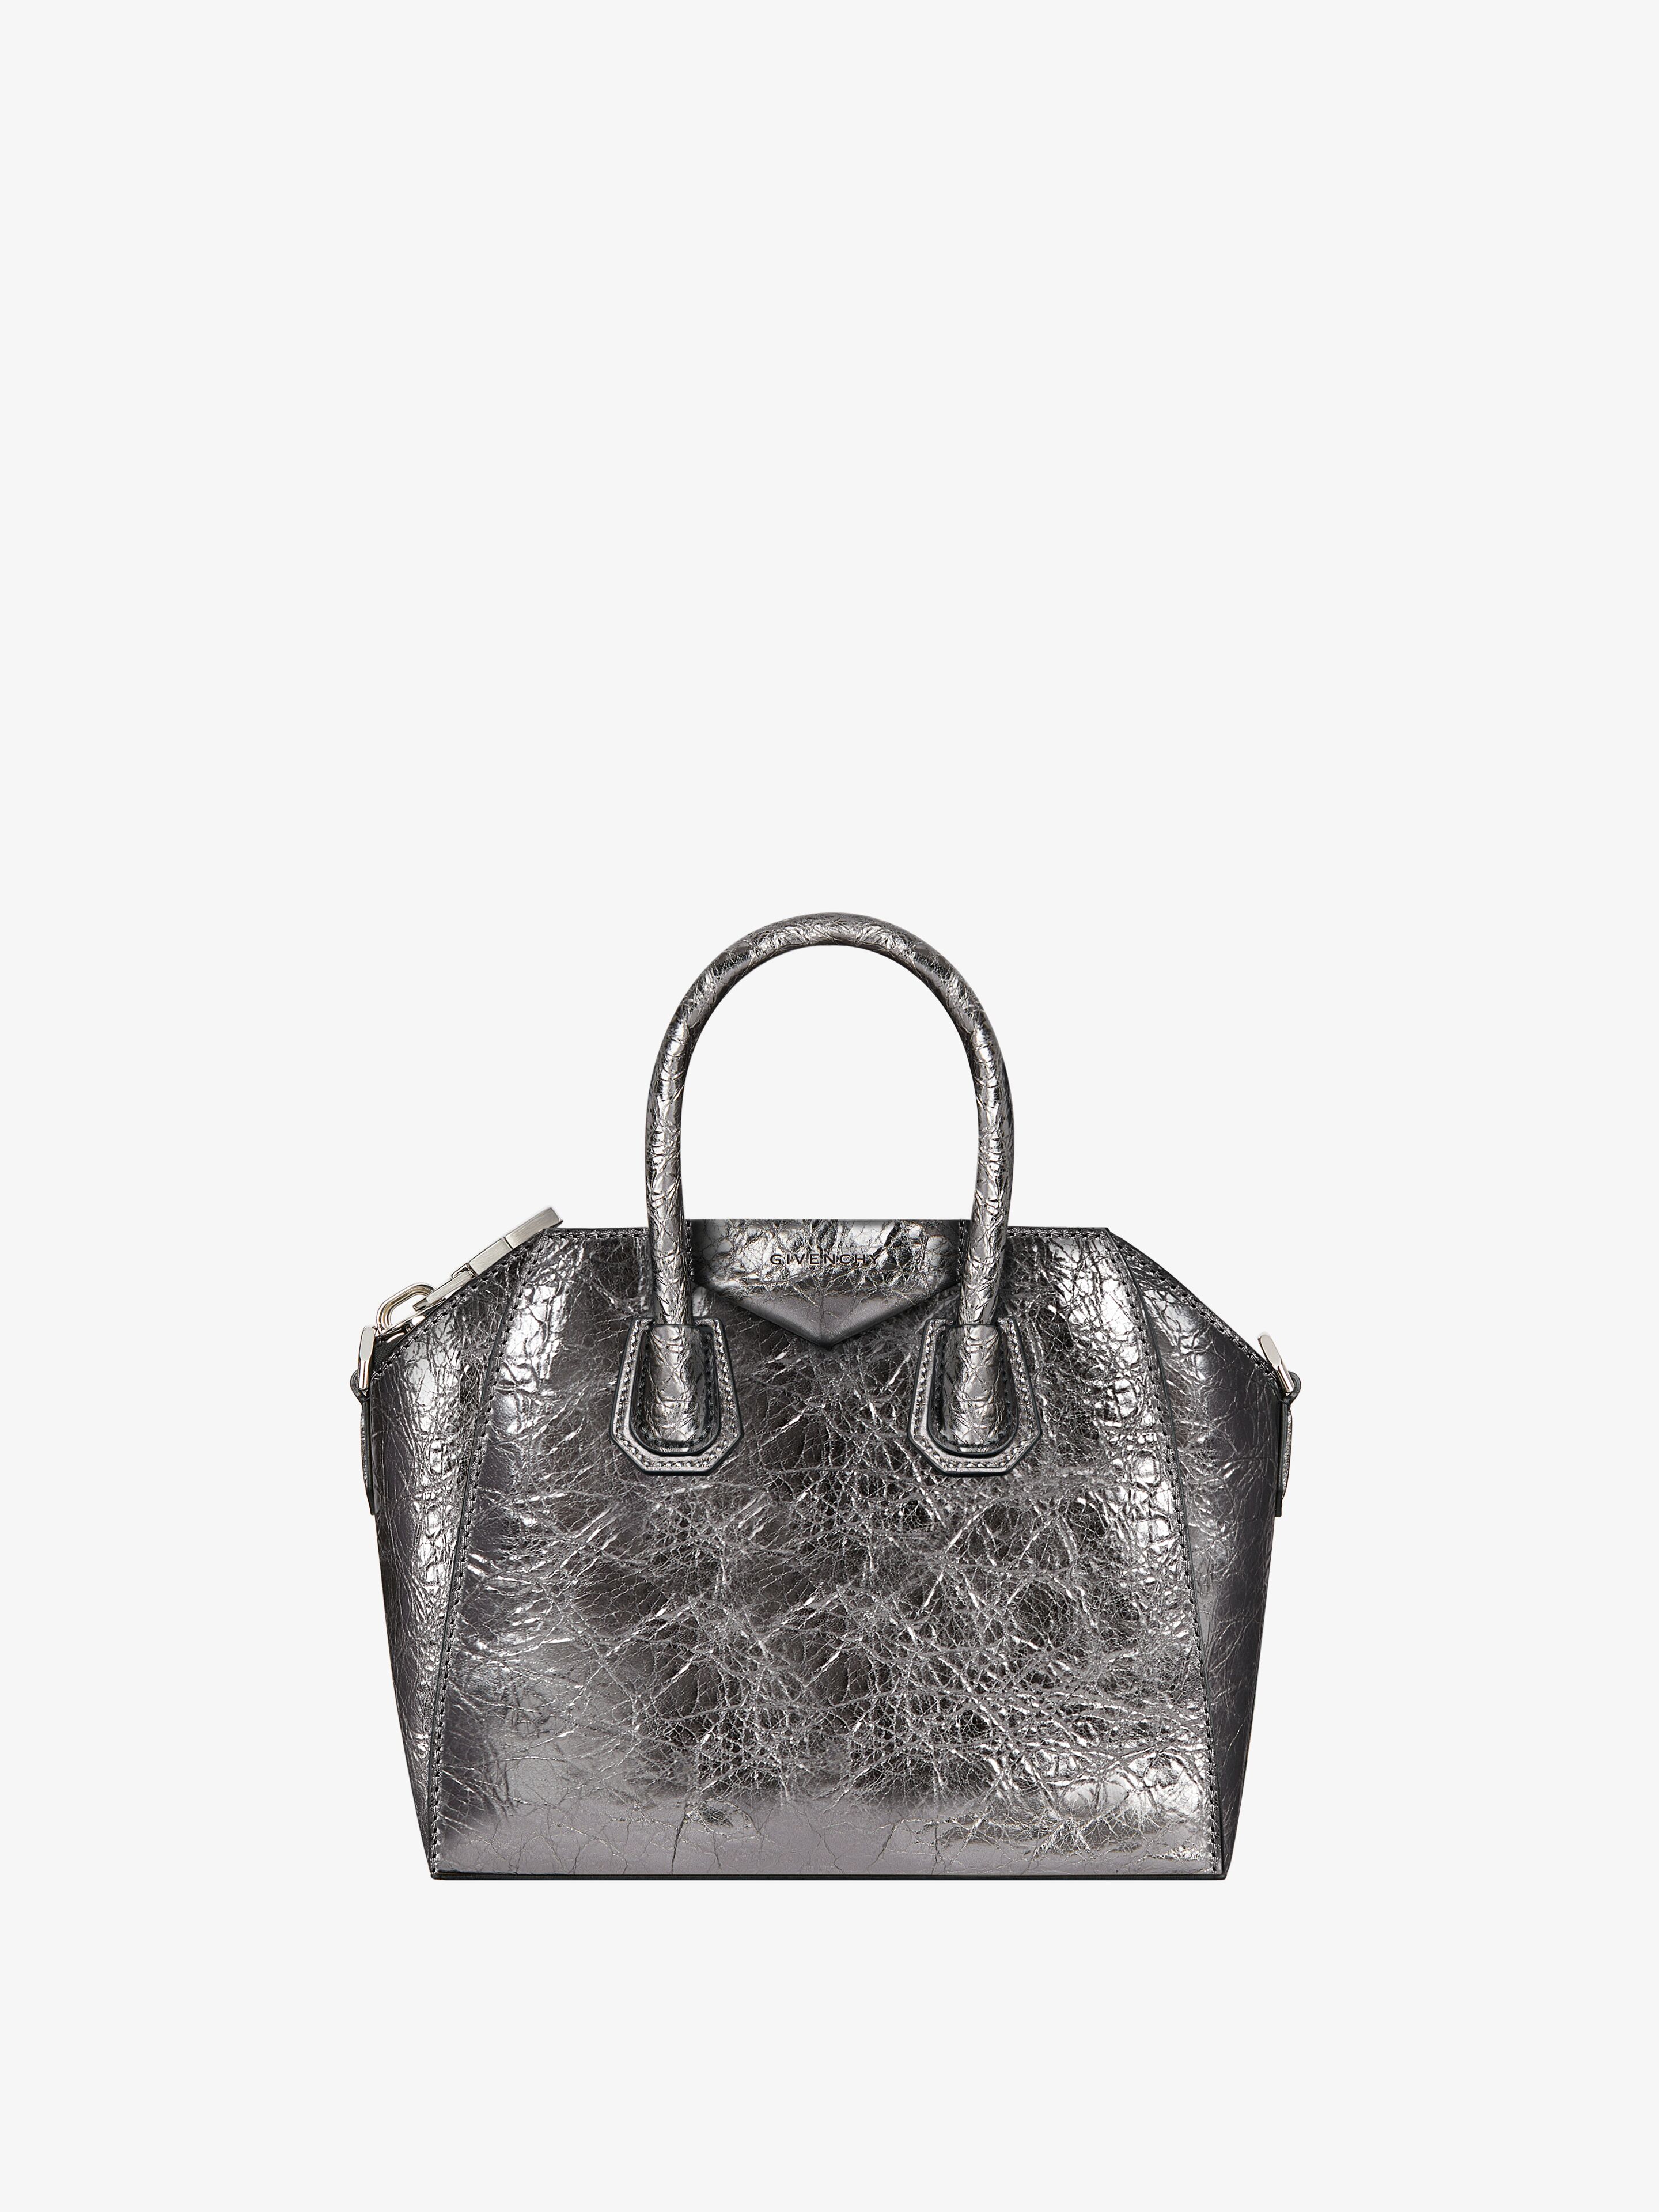 Givenchy Women's Mini Antigona Bag In Laminated Leather In Multicolor